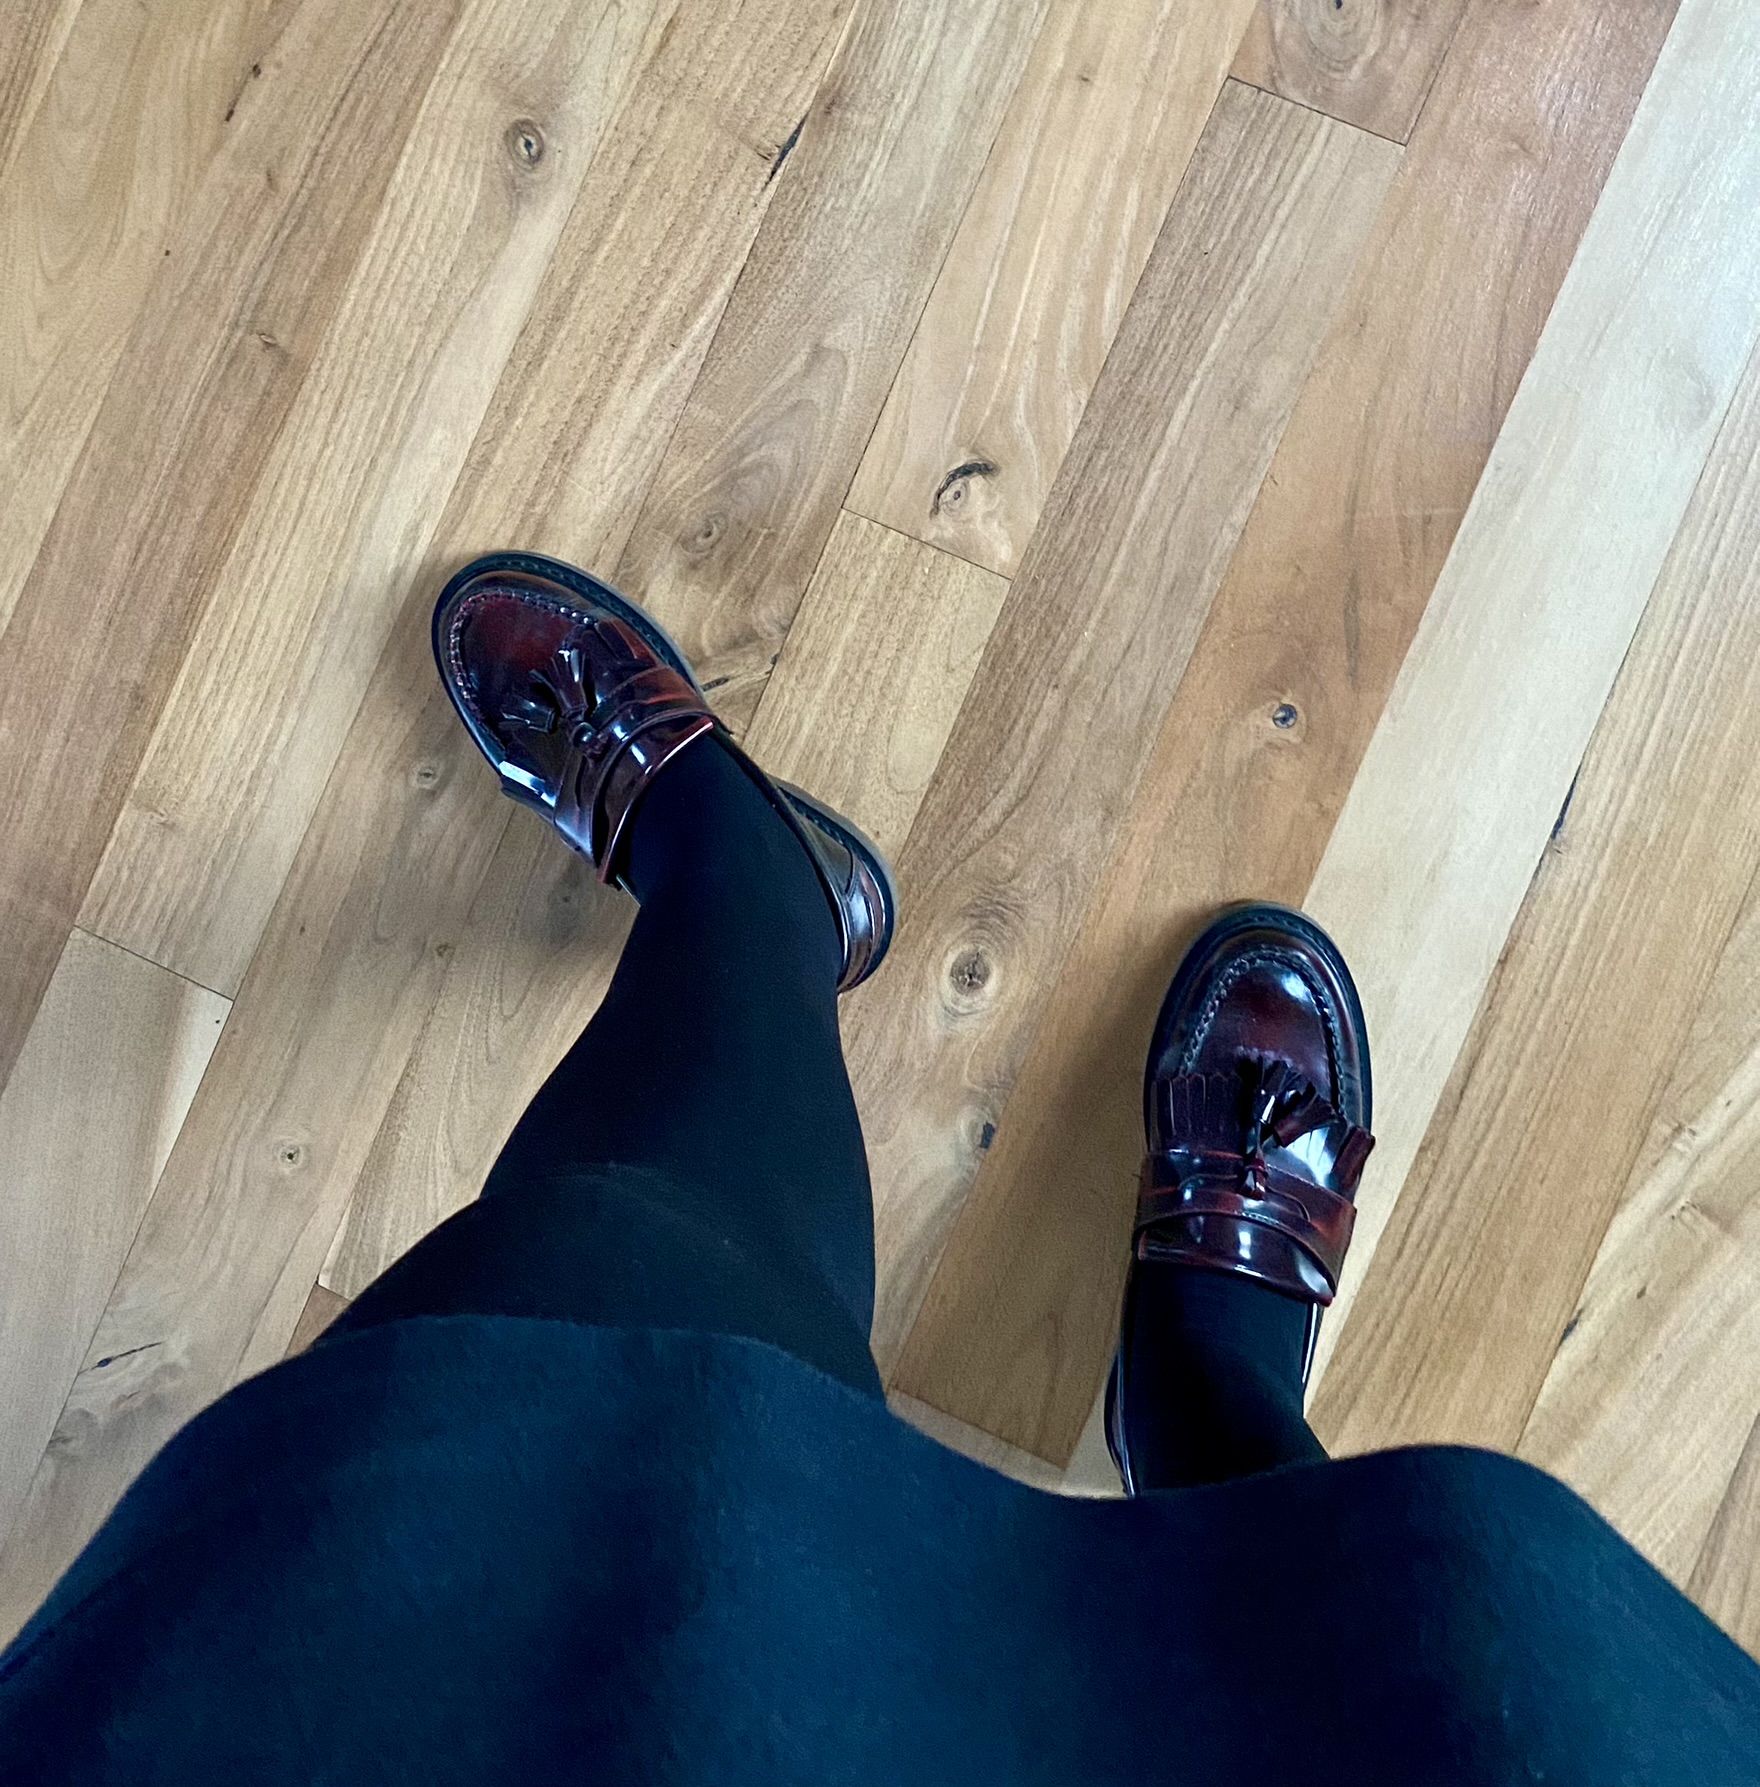 Magnifico' Brown Leather Split Toe Derby UK 9 EU 43 - Abbot's Shoes